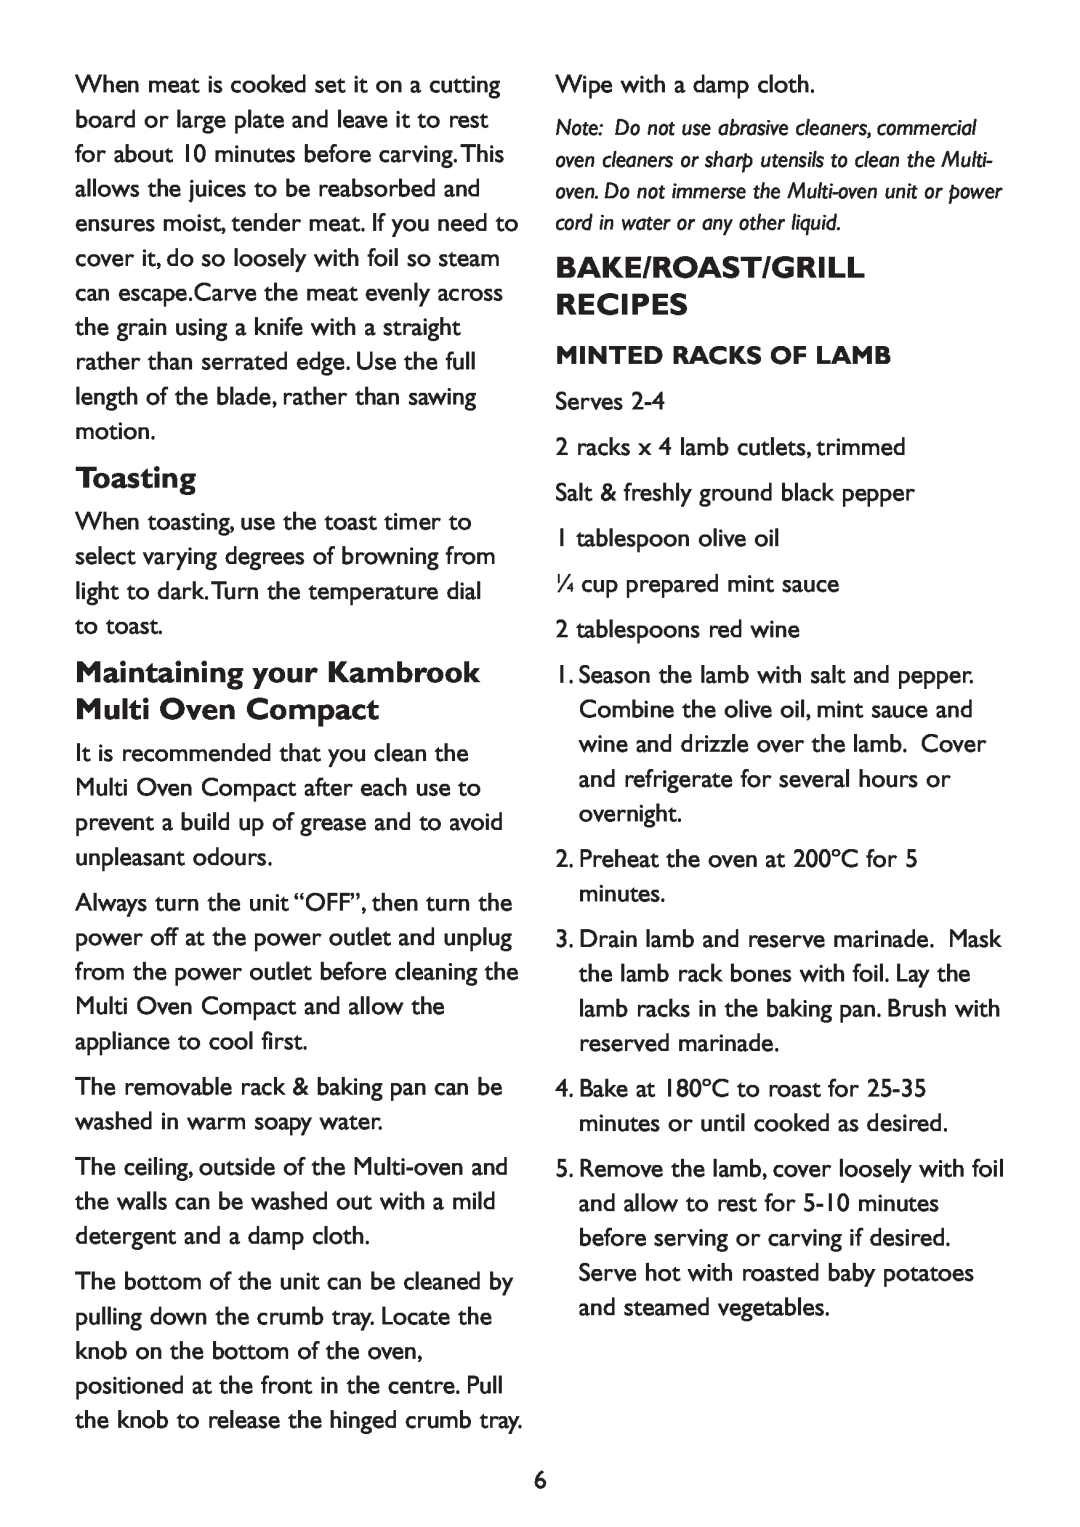 Kambrook KOT100 Toasting, Maintaining your Kambrook Multi Oven Compact, Bake/Roast/Grill Recipes, Minted Racks Of Lamb 